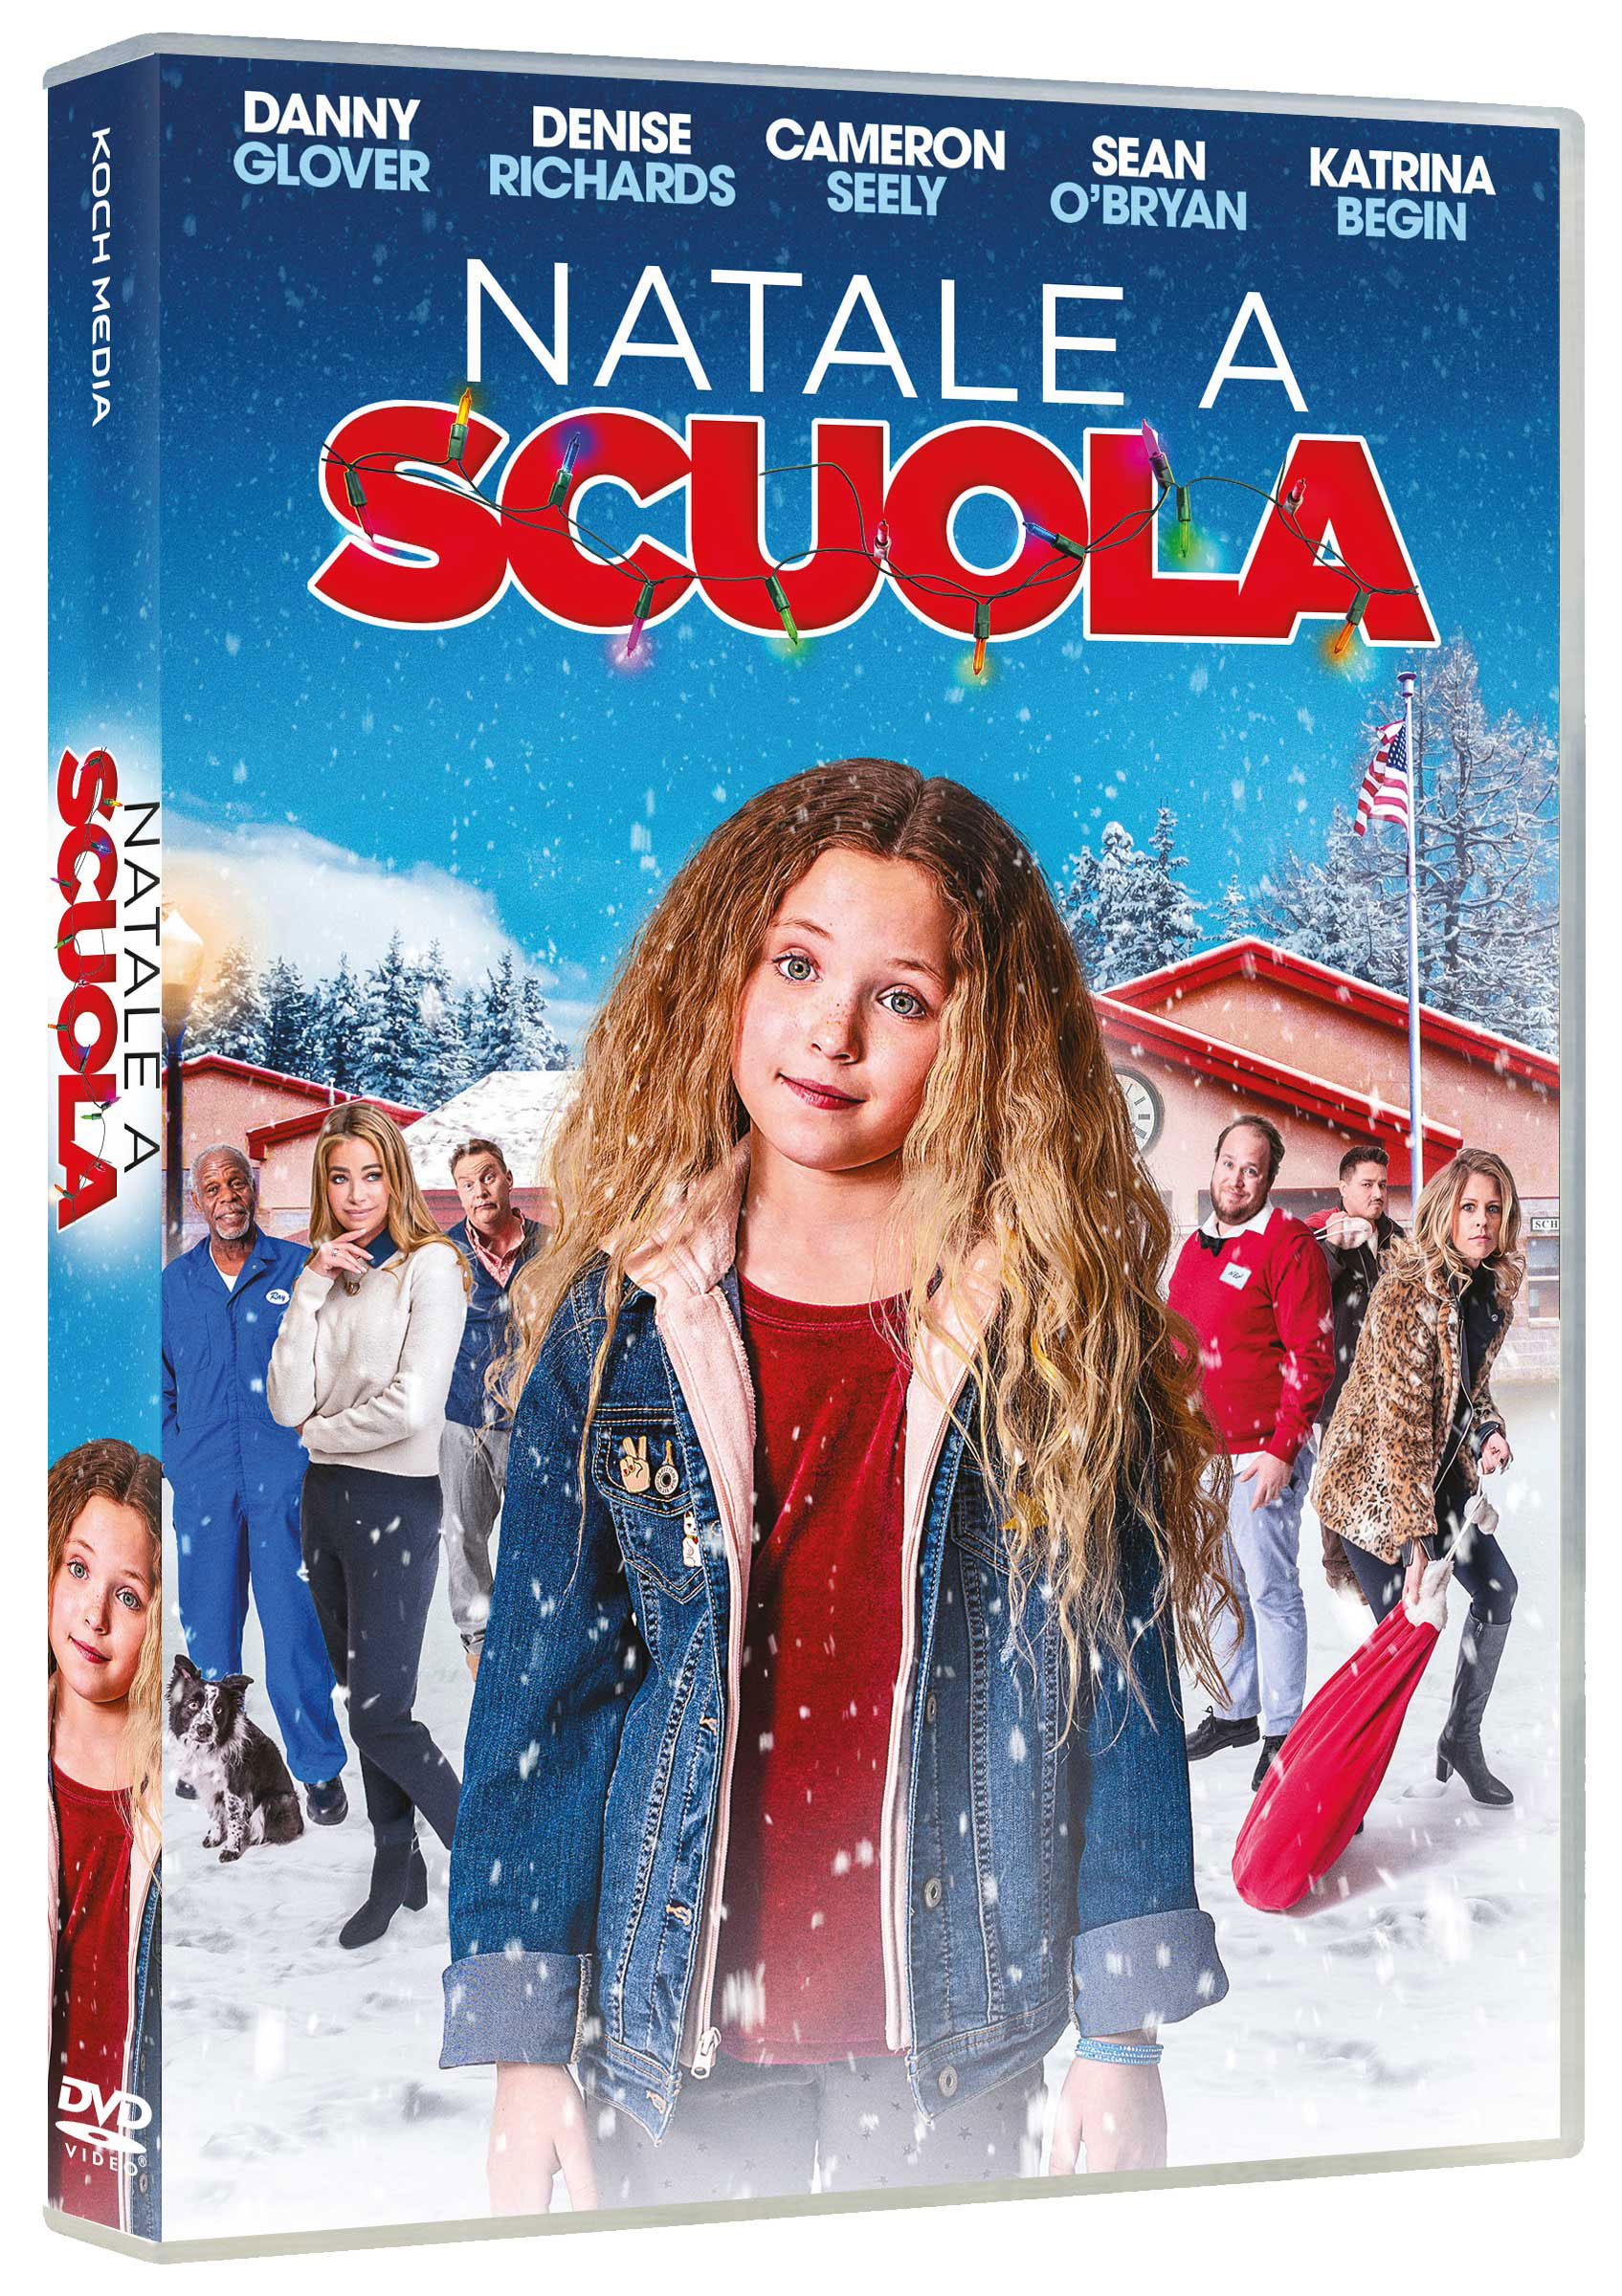 Natale a scuola in DVD